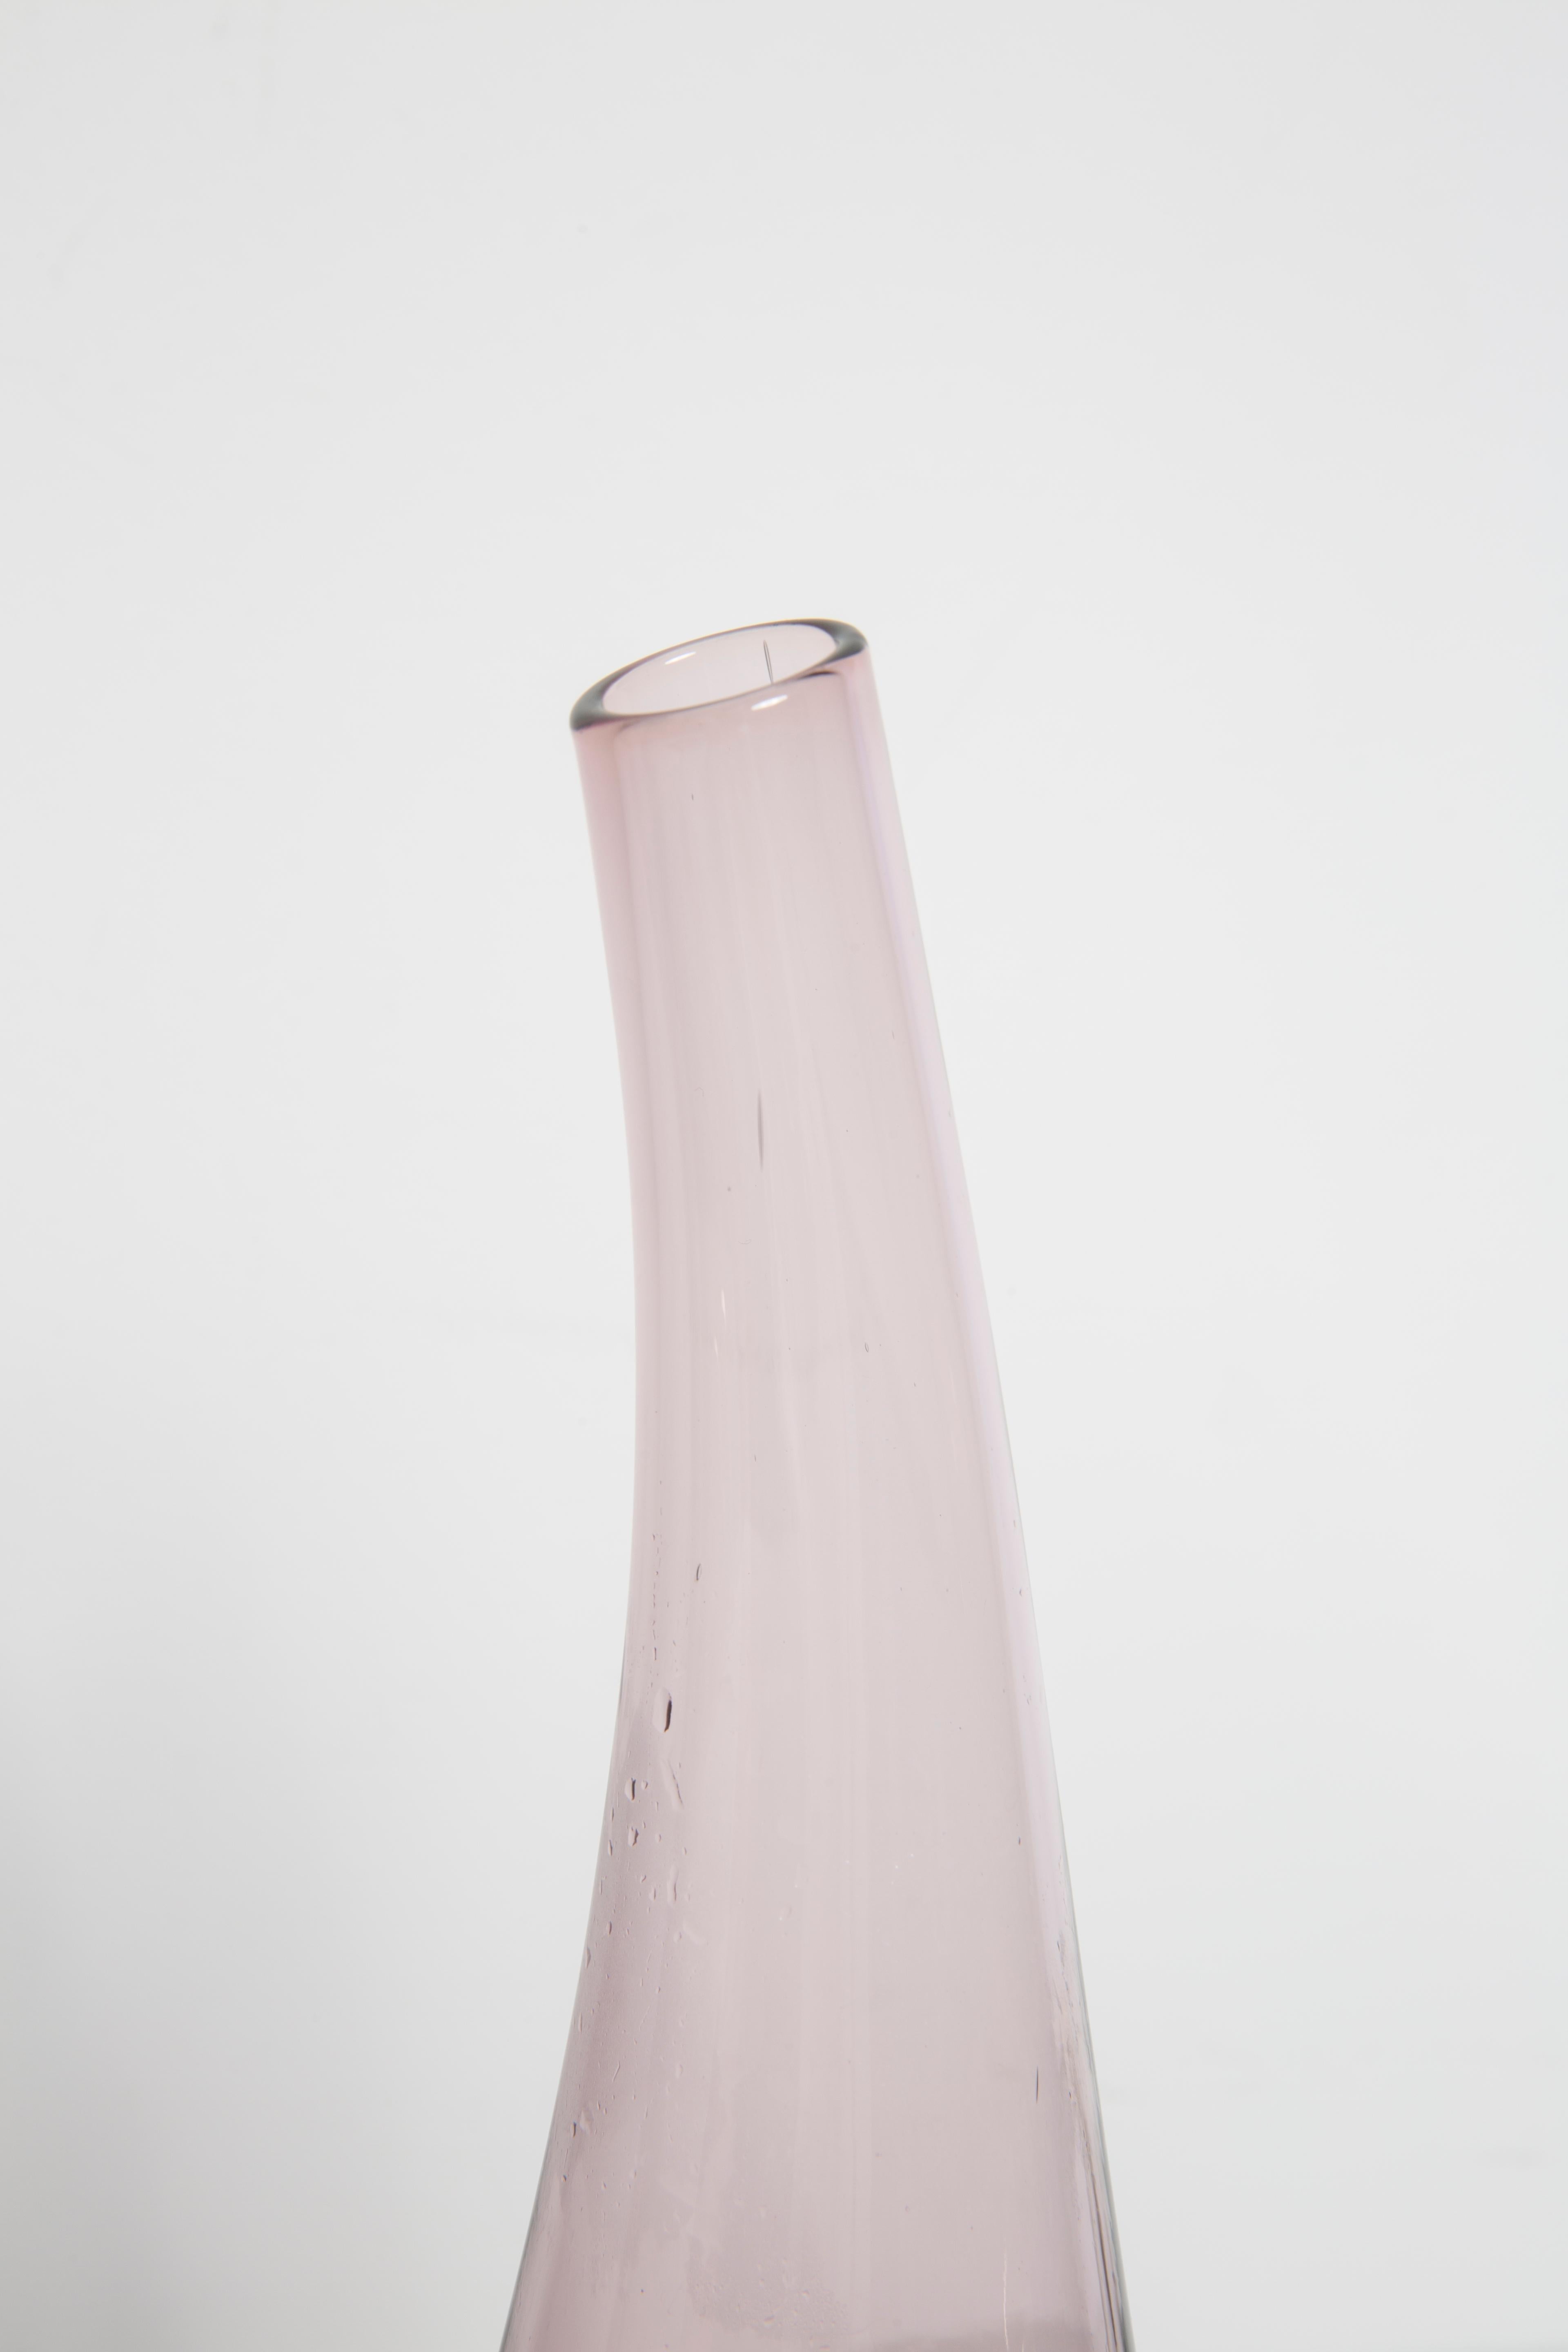 Mid Century Vintage Purple Decorative Glass Vase, Europe, 1960s In Good Condition For Sale In 05-080 Hornowek, PL